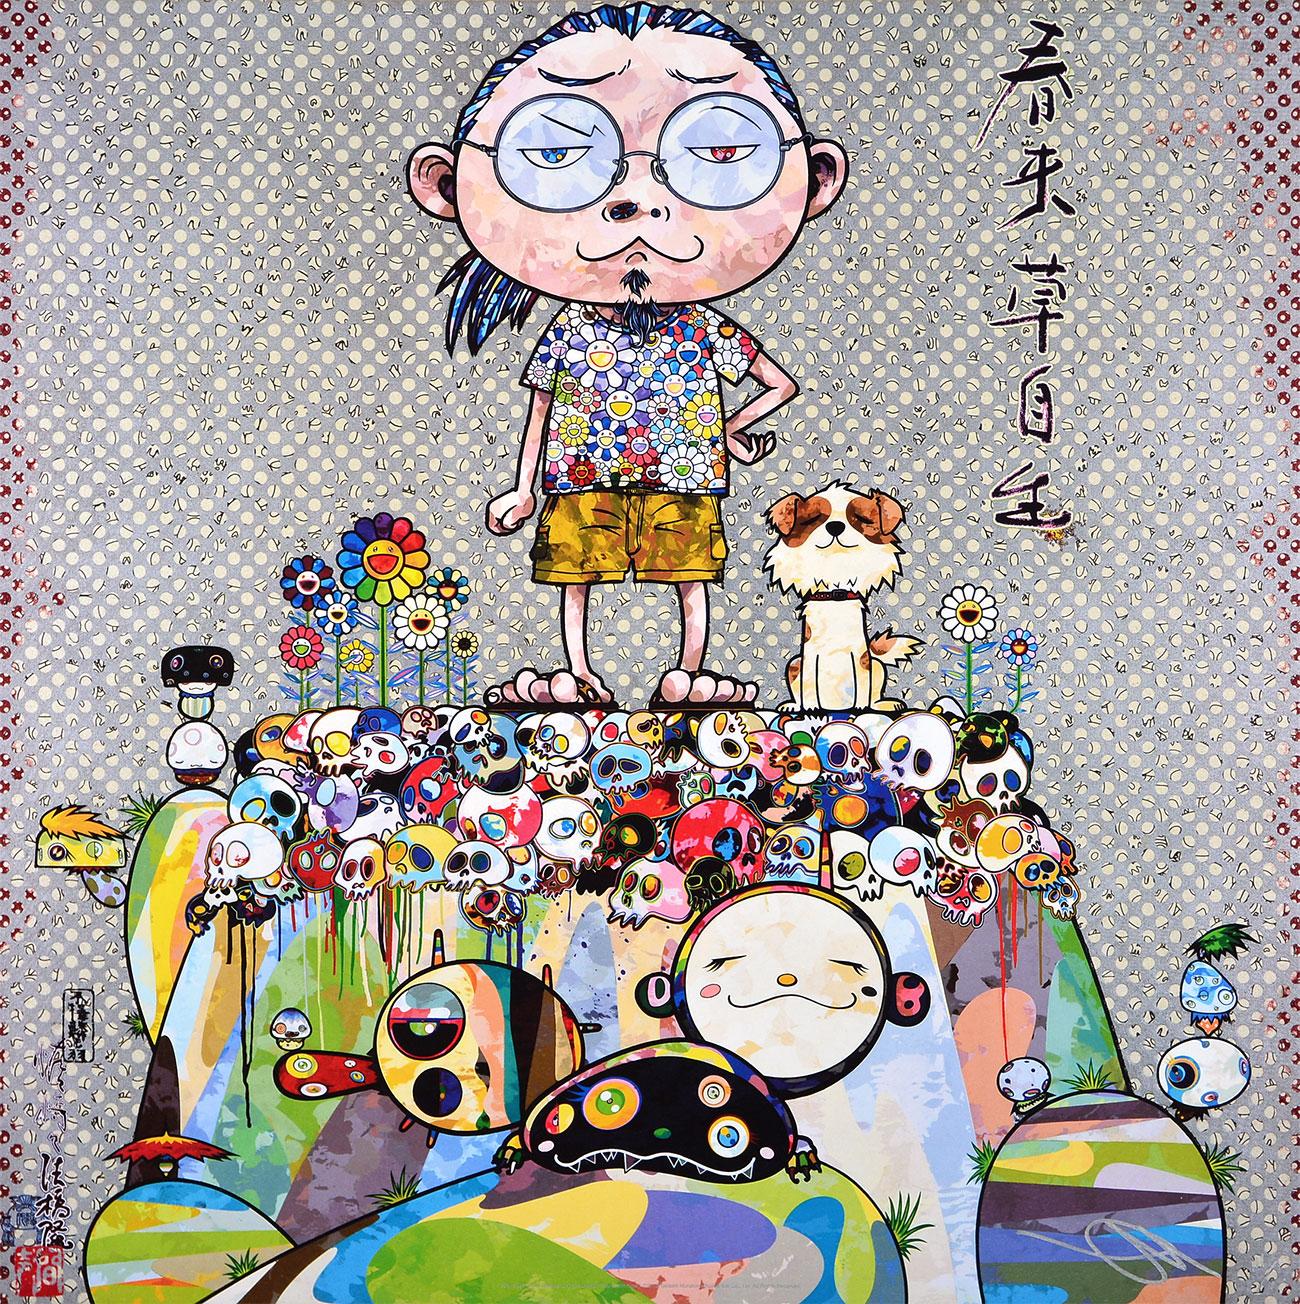 TAKASHI MURAKAMI: With eyes on... Hand signed & numbered. Superflat, Pop Art